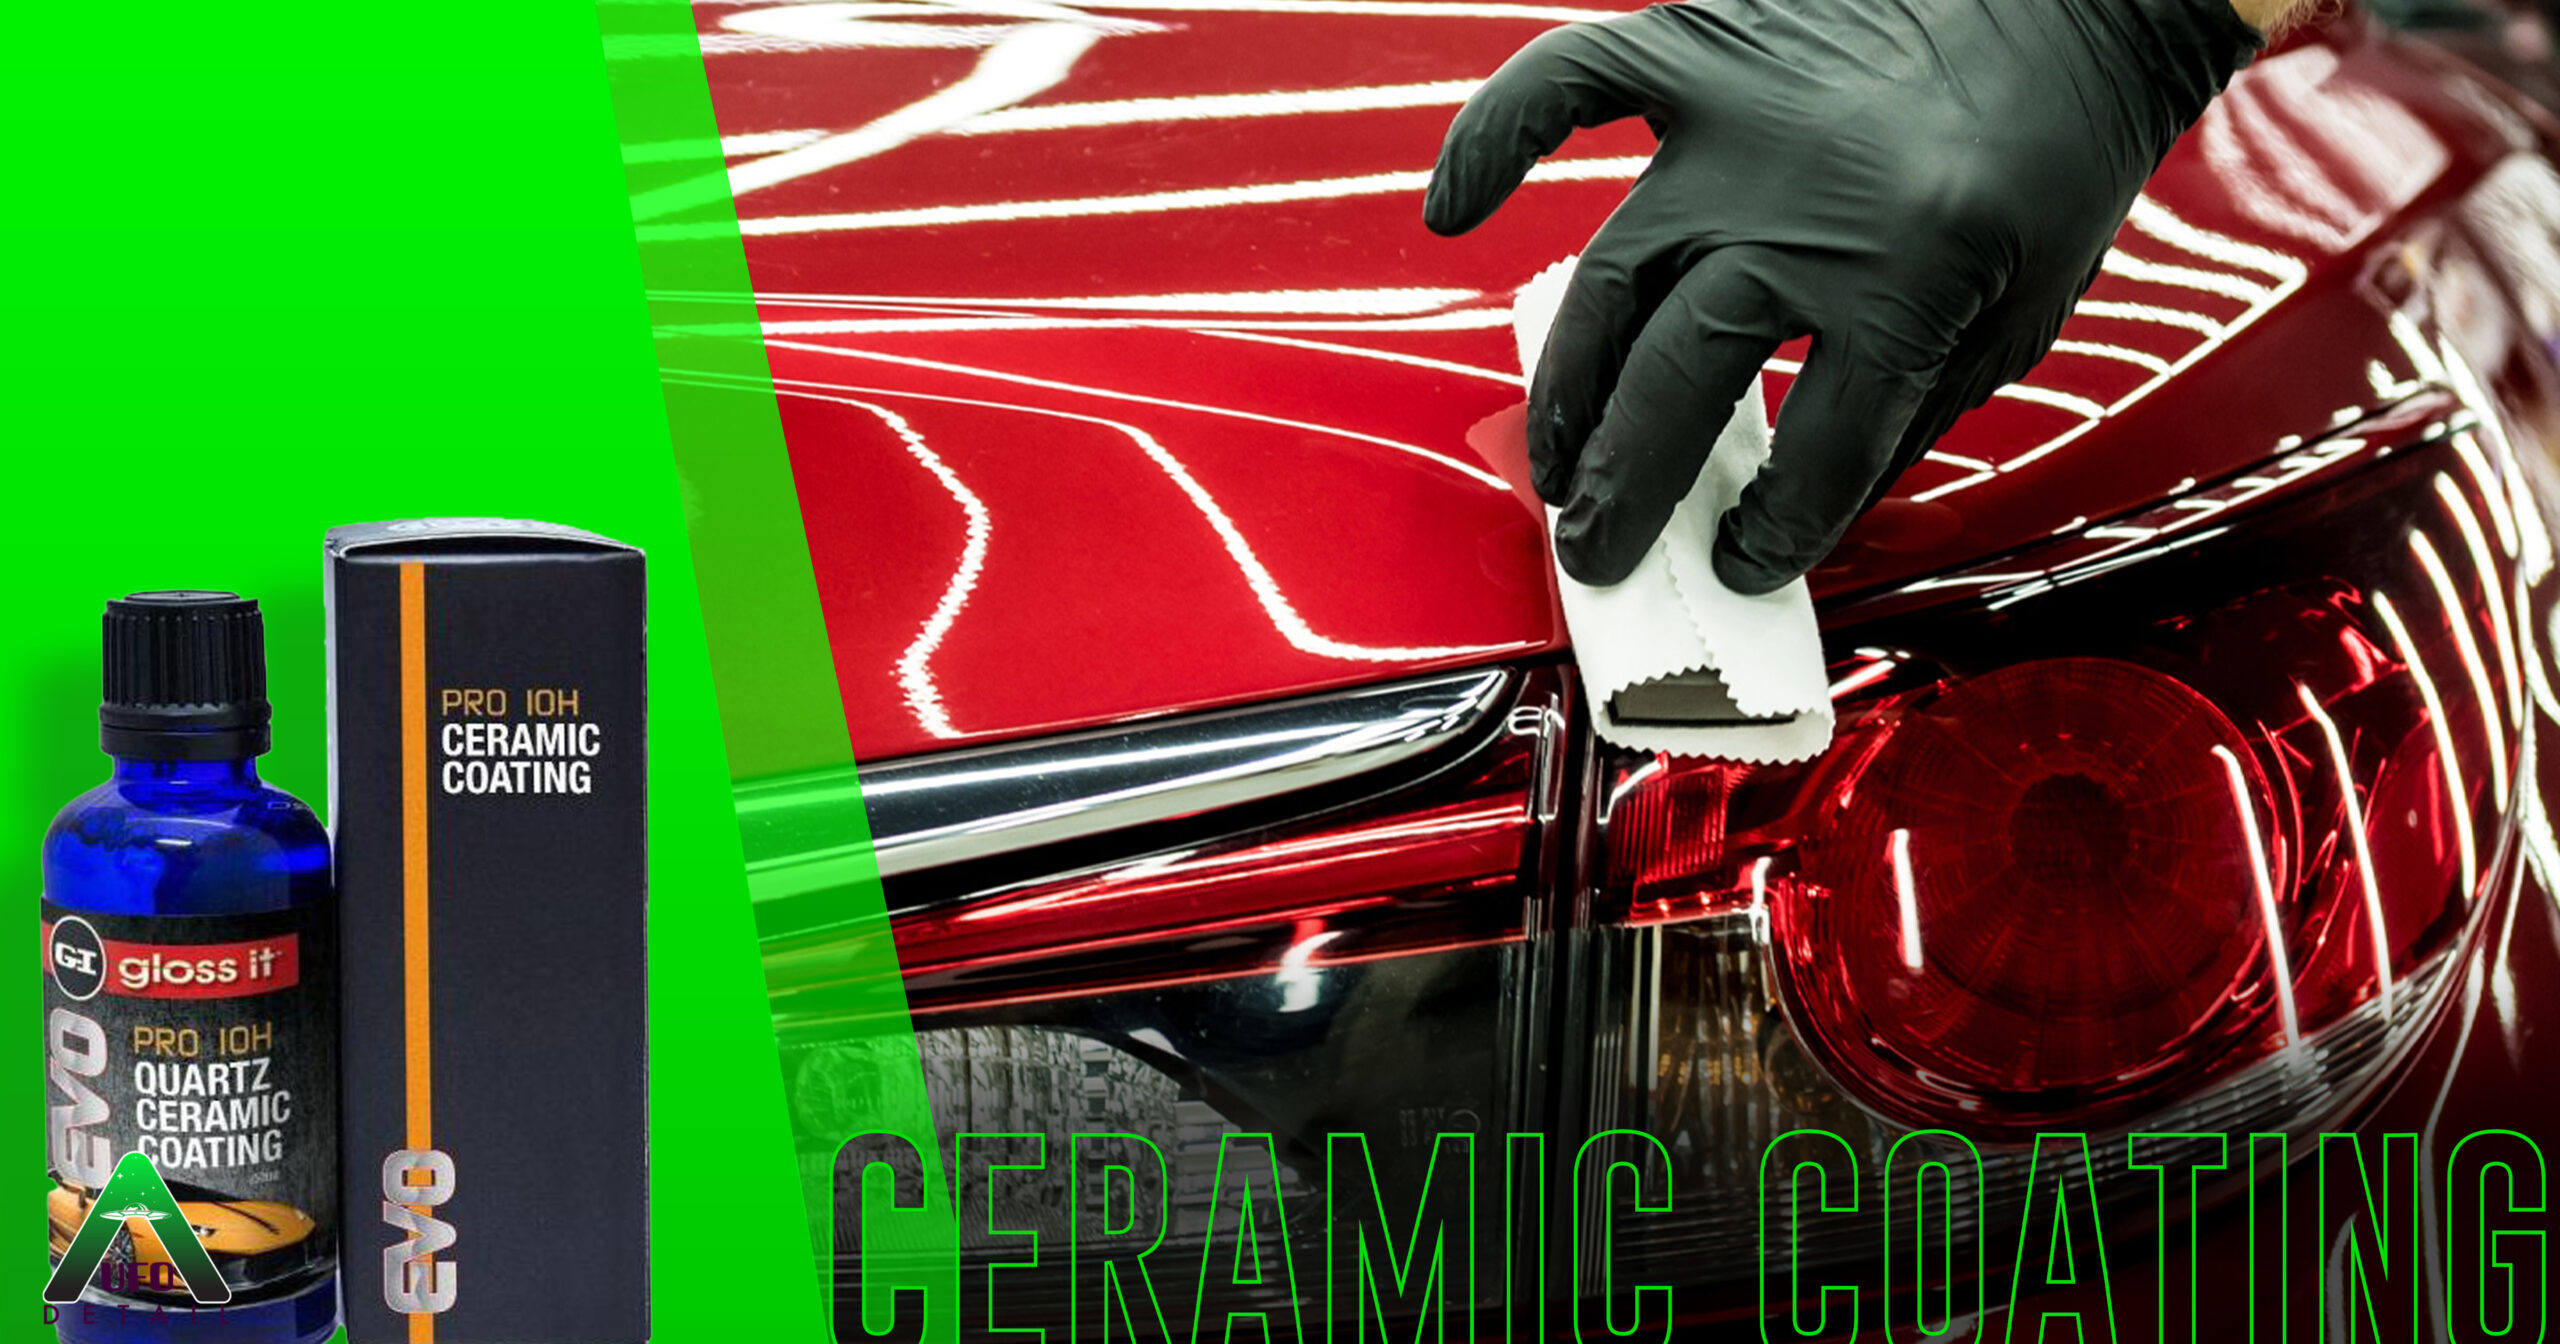 What is Ceramic Coating?